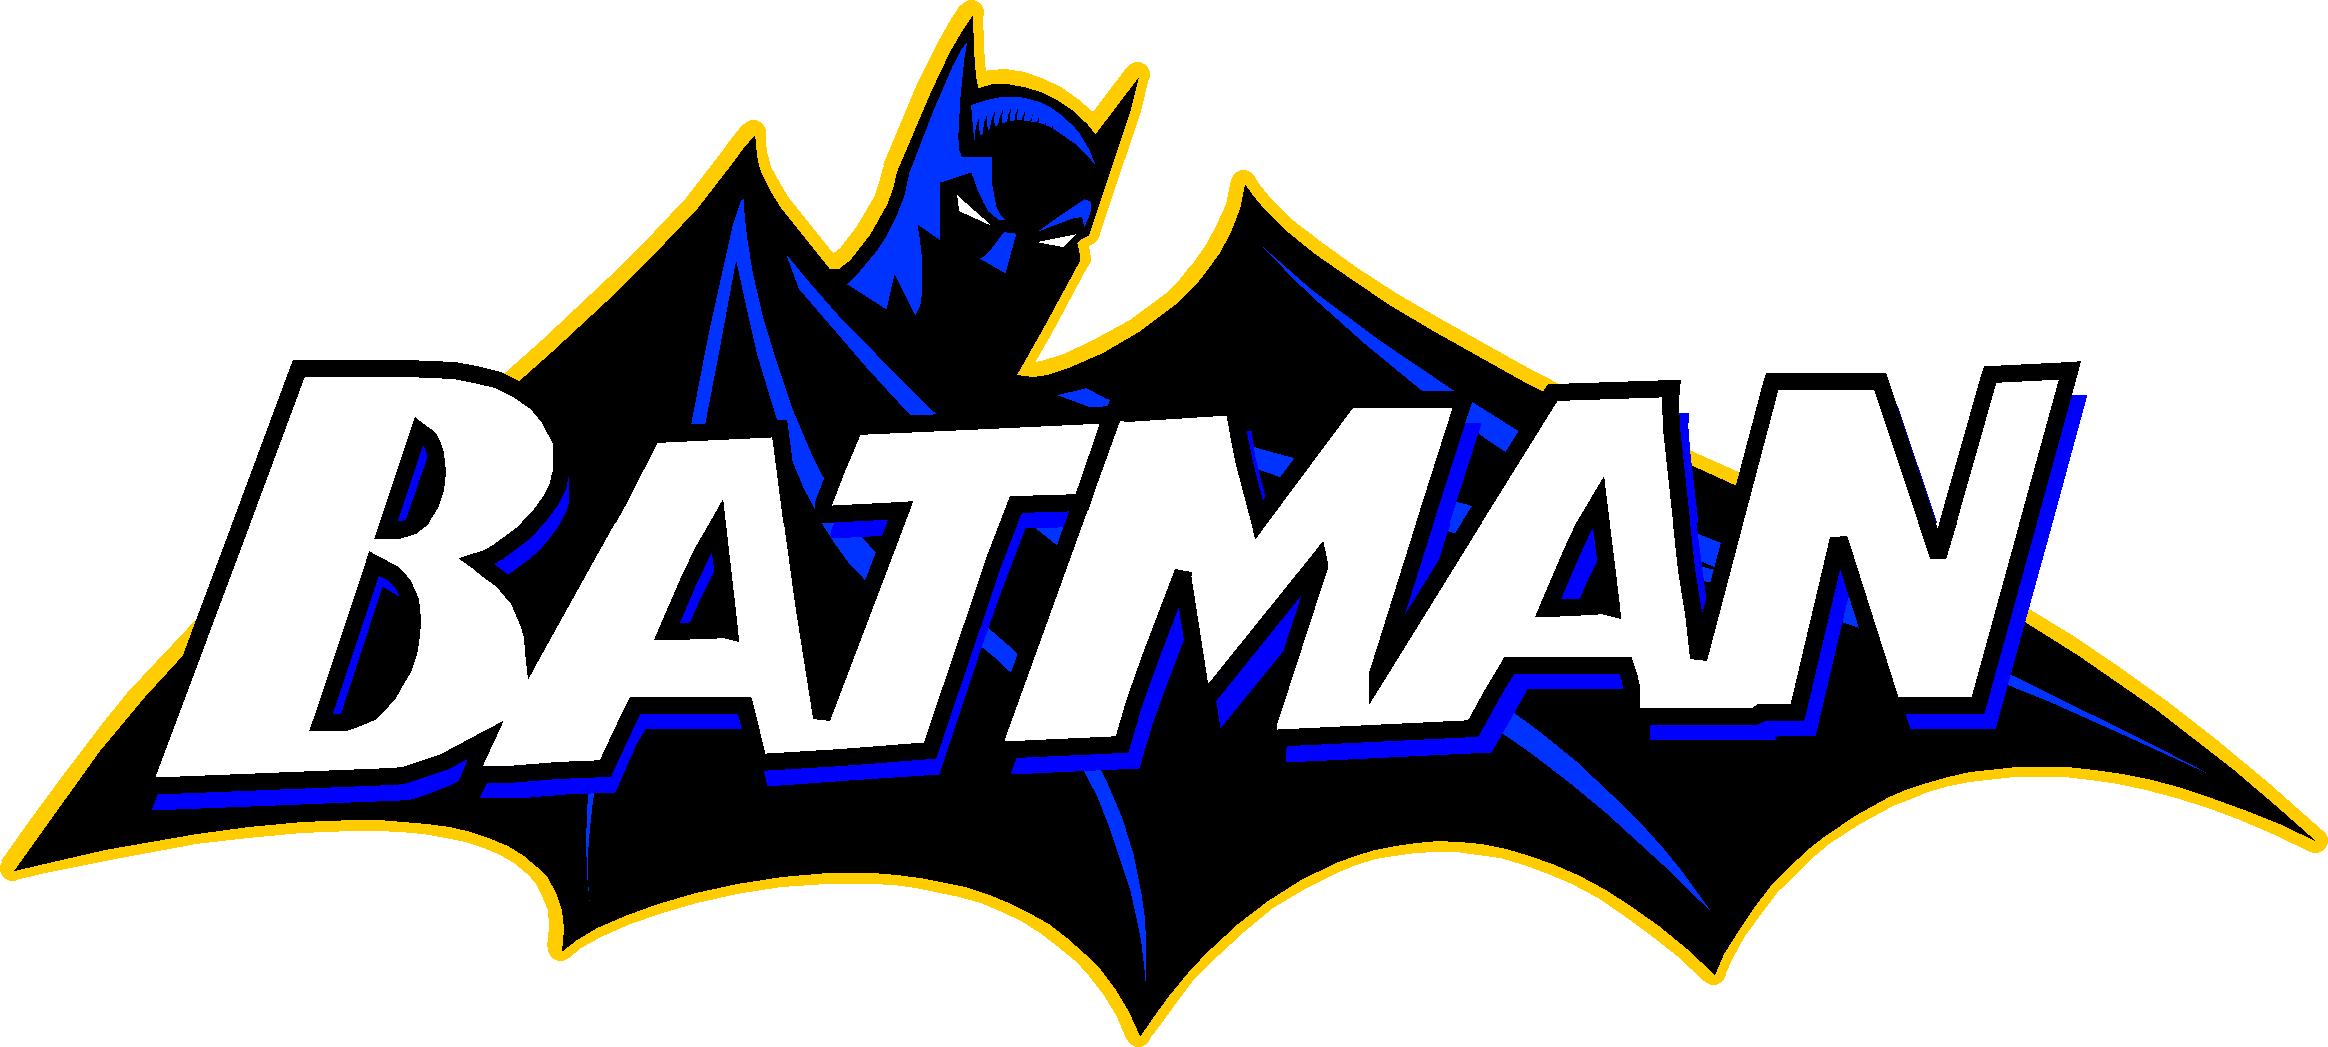 Batman title logo : The Asylum - The Outhouse - The Greatest Comic ...